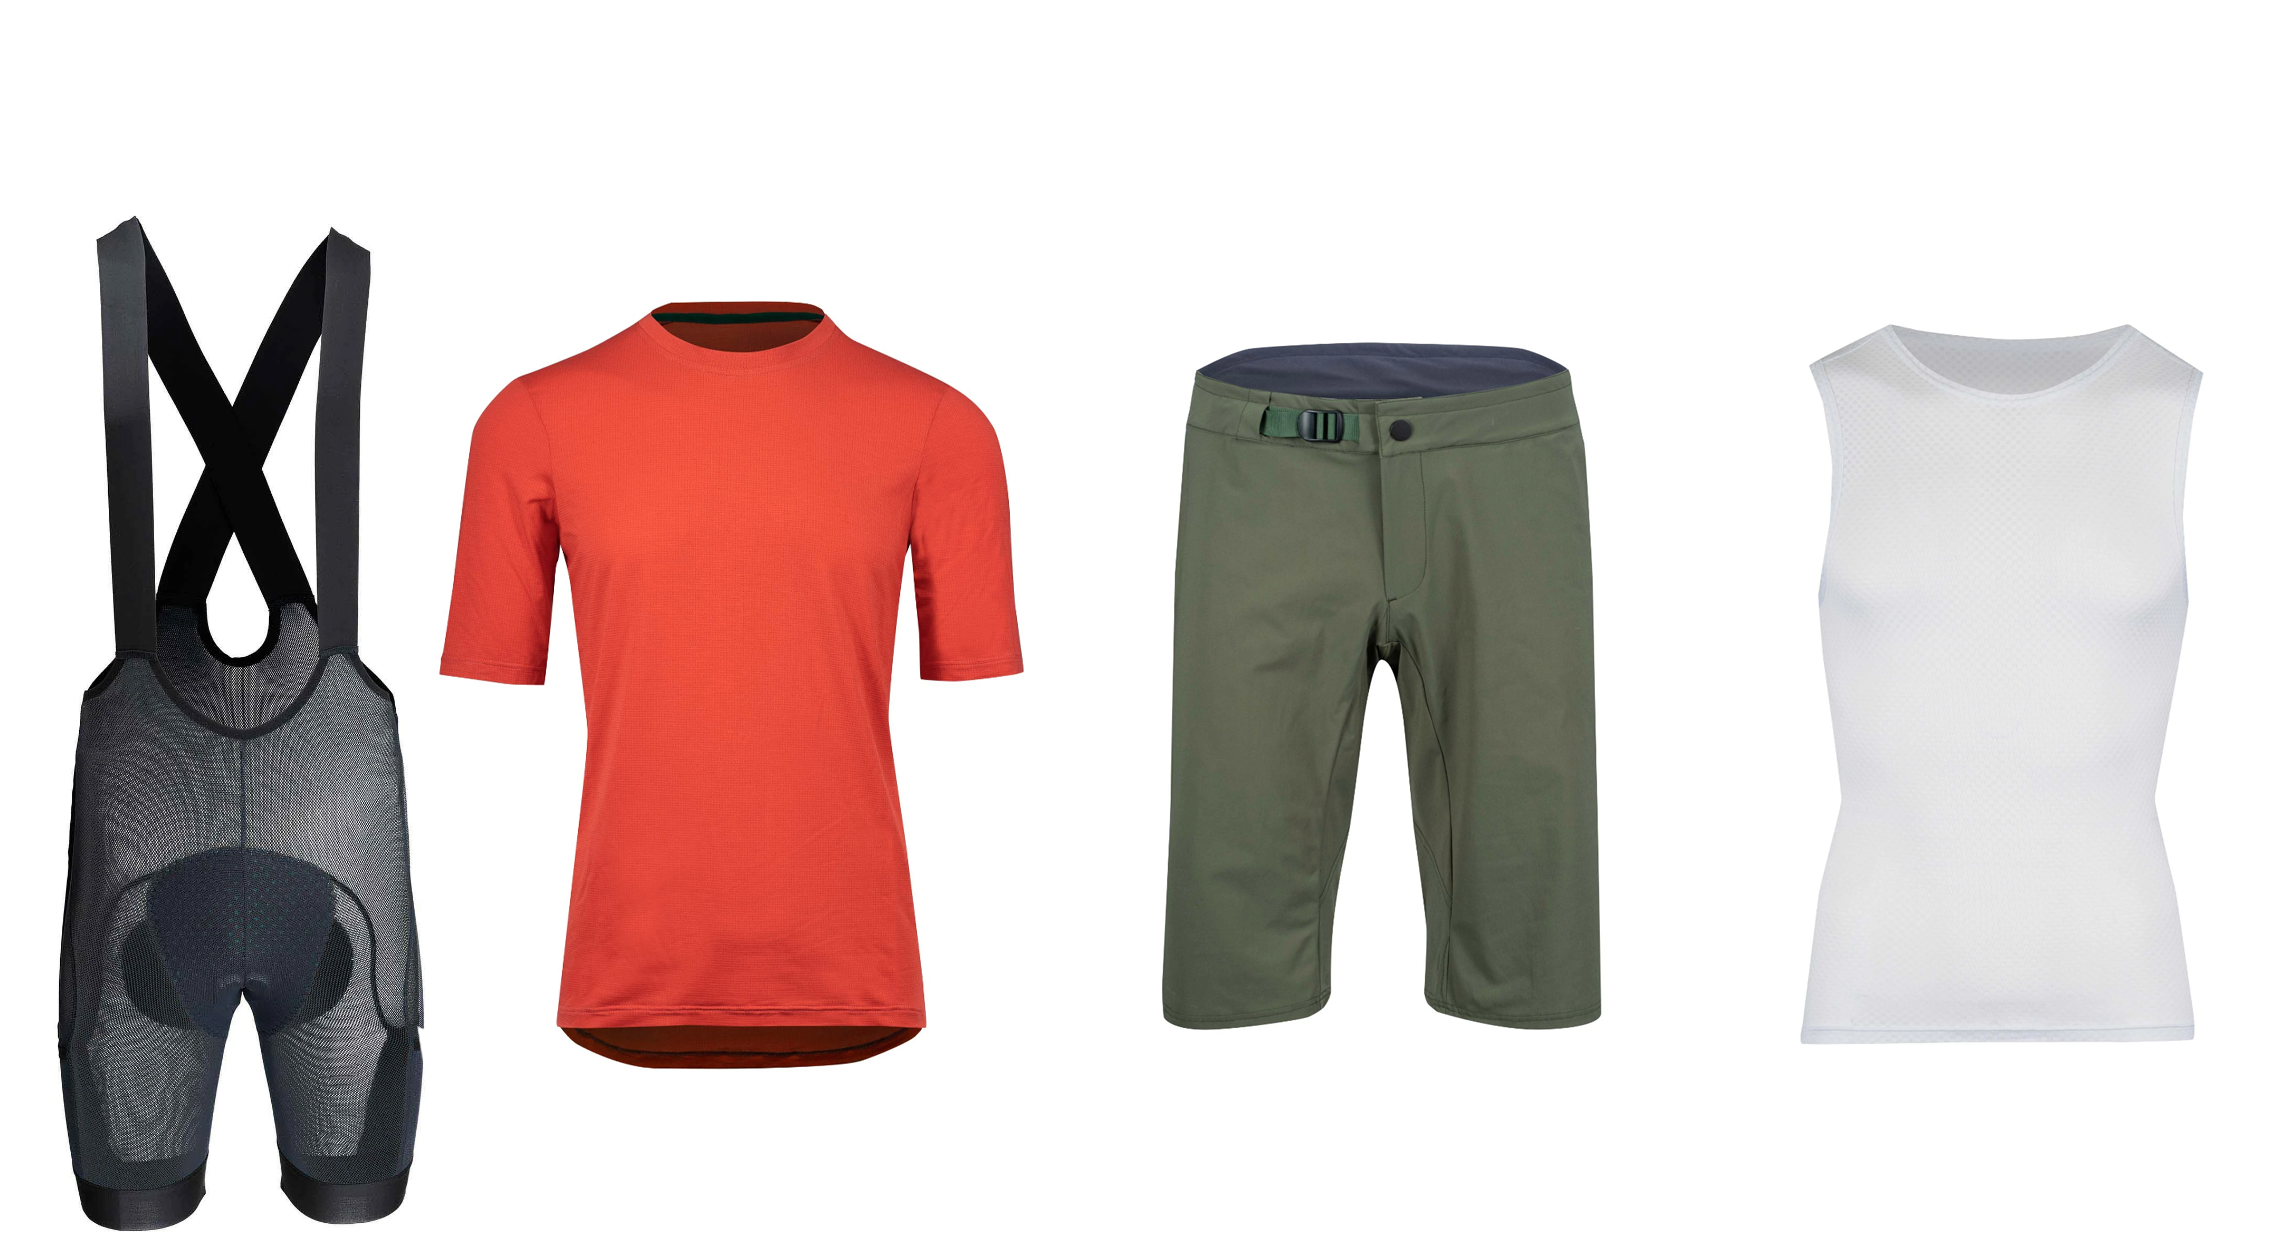 Velocio Trail Kit clothes